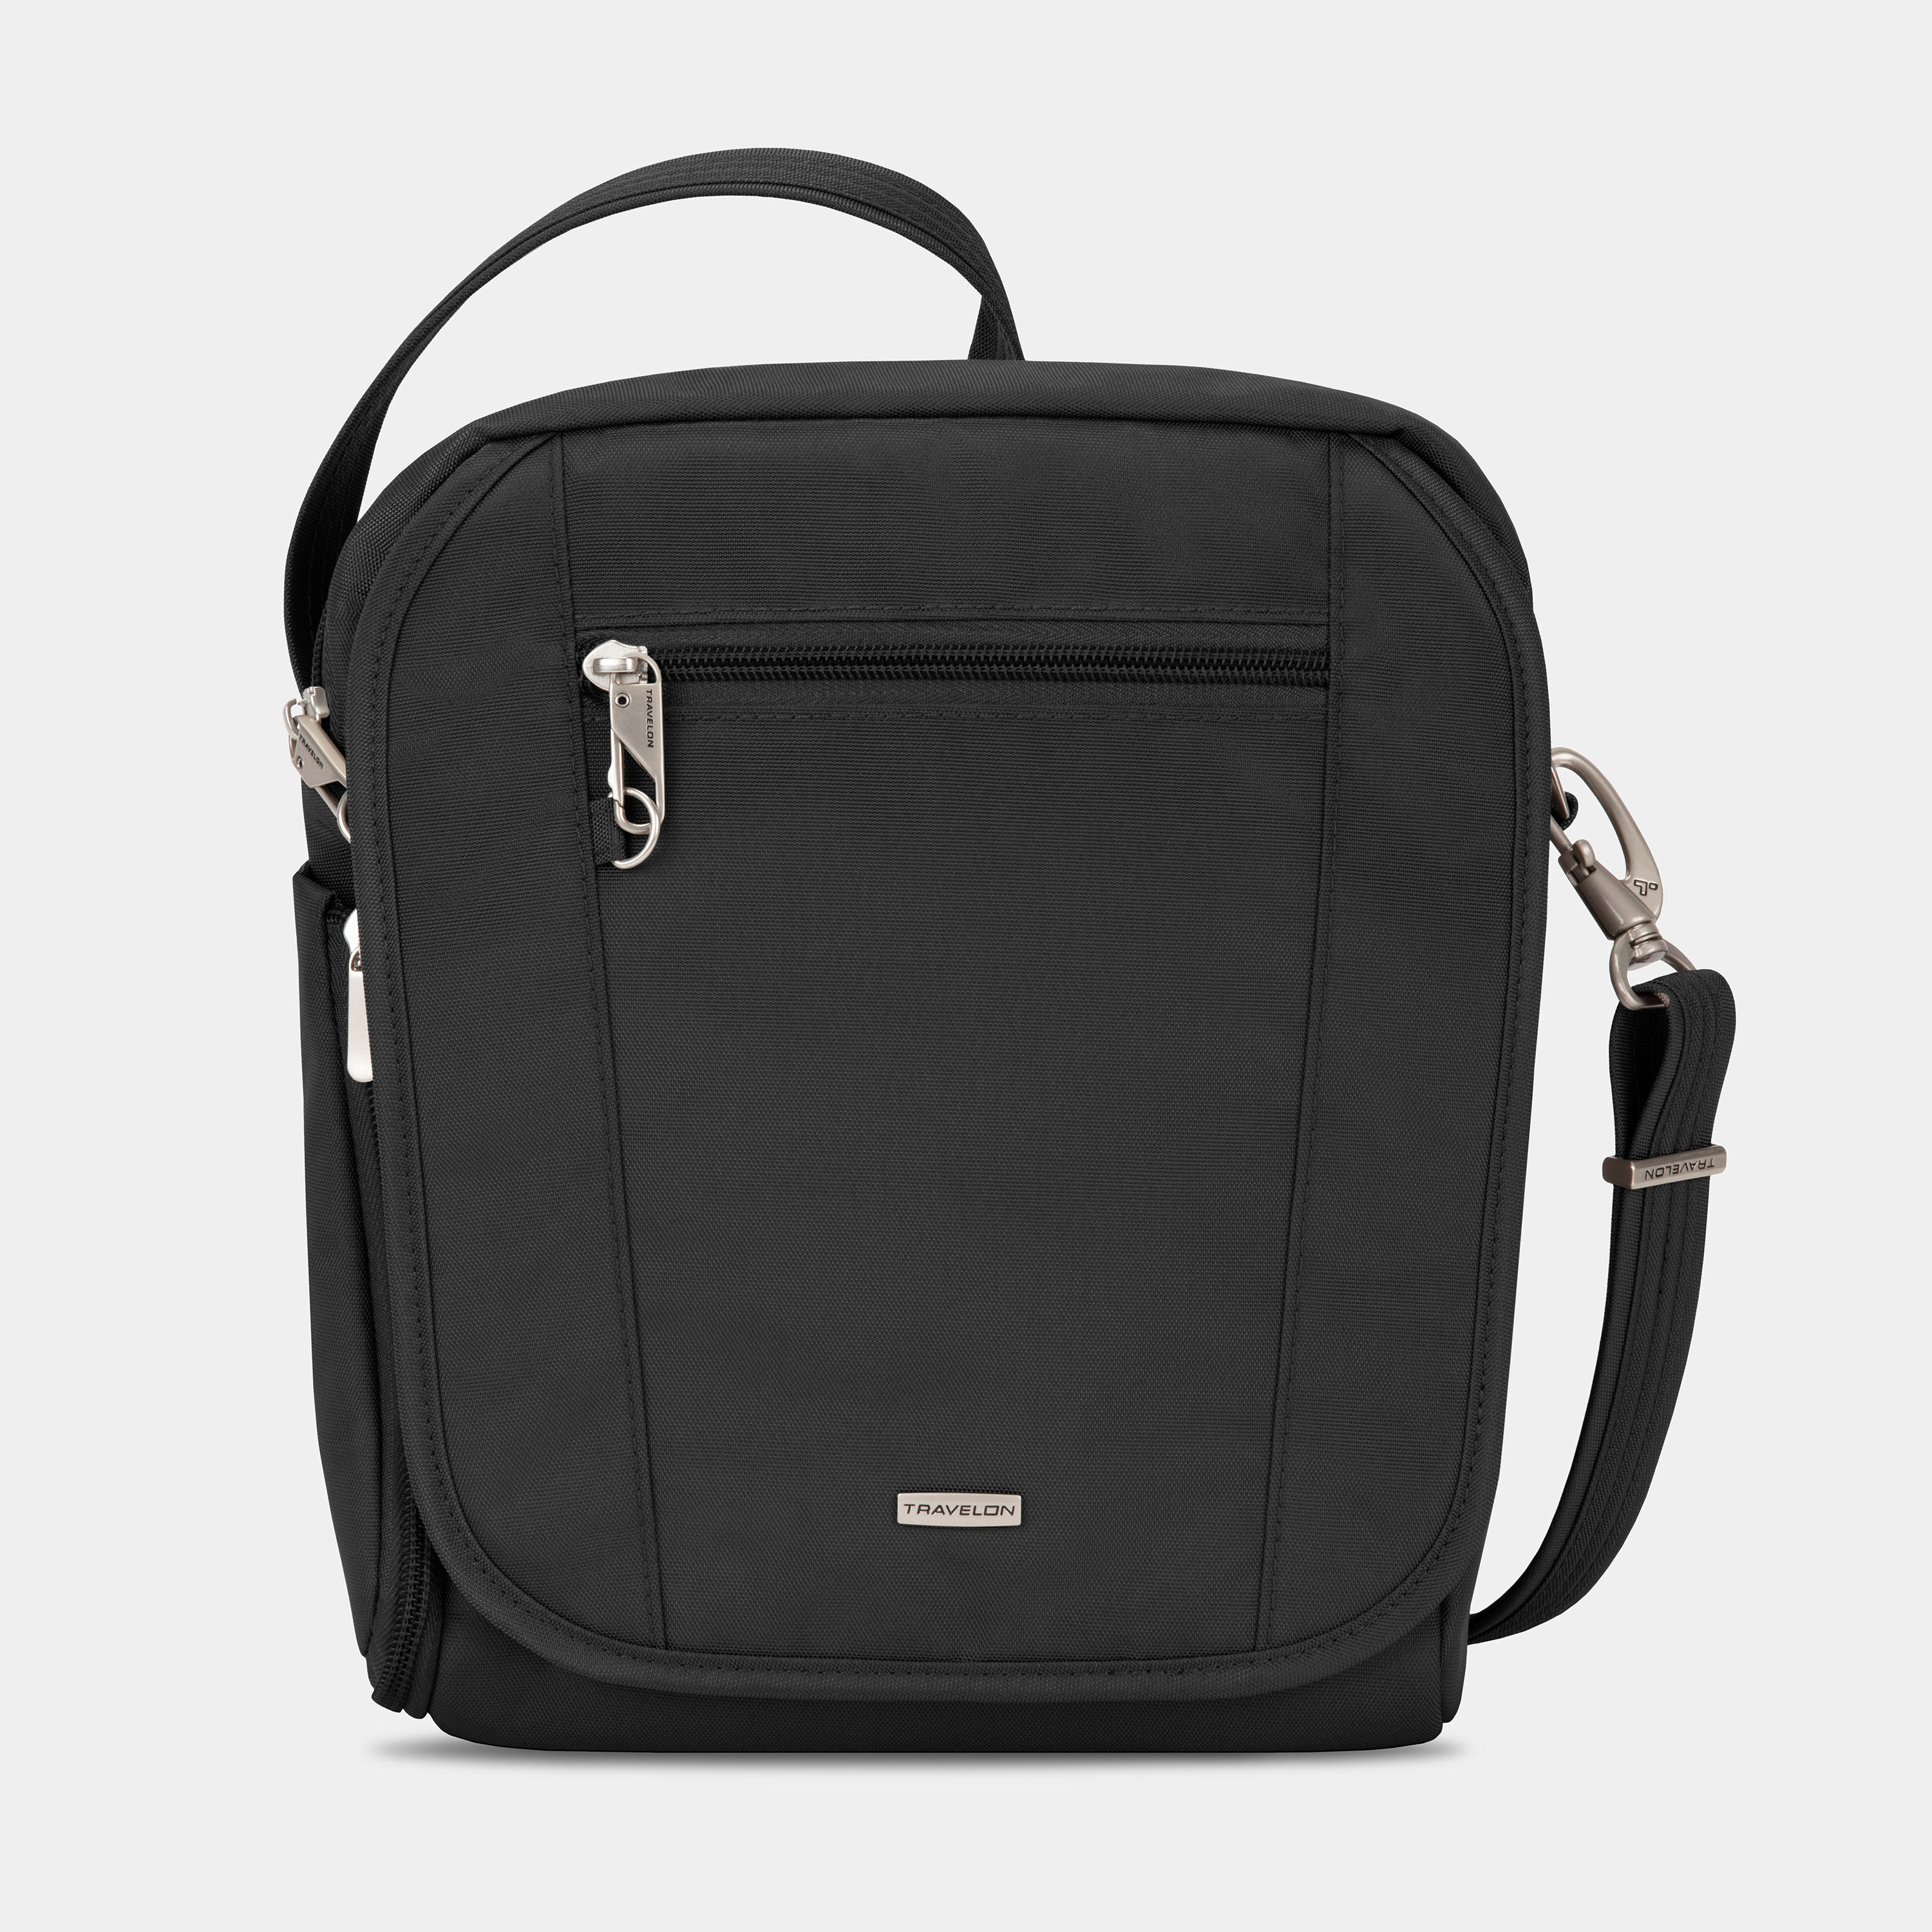 Waterproof Bag Personal Anti Theft Shoulder Man Pocket Portable Chest  Travel | eBay